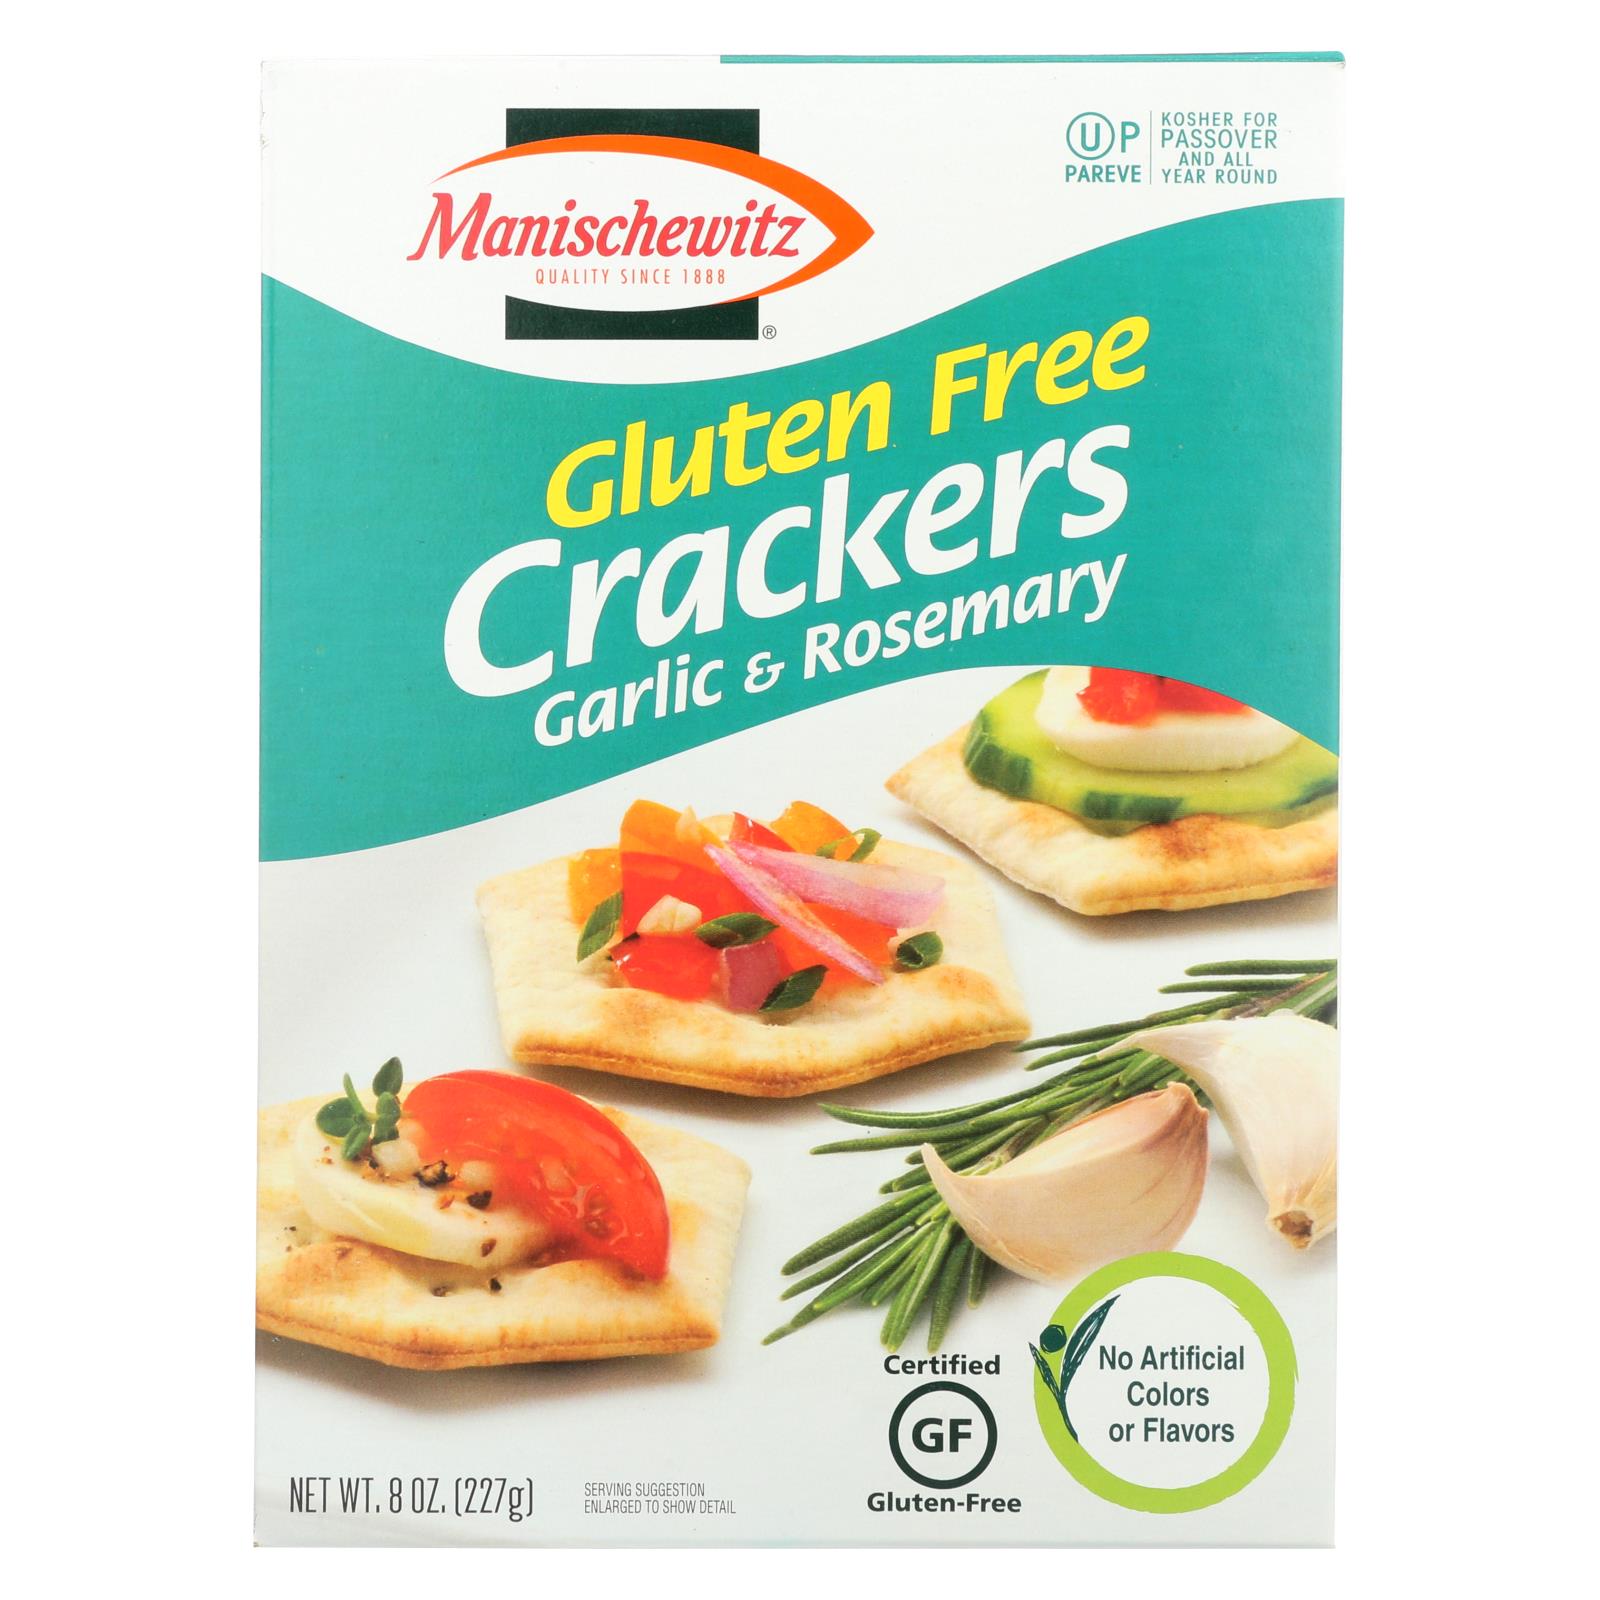 Manischewitz - Gluten Free Crackers - Garlic and Rosemary - 12개 묶음상품 - 8 oz.